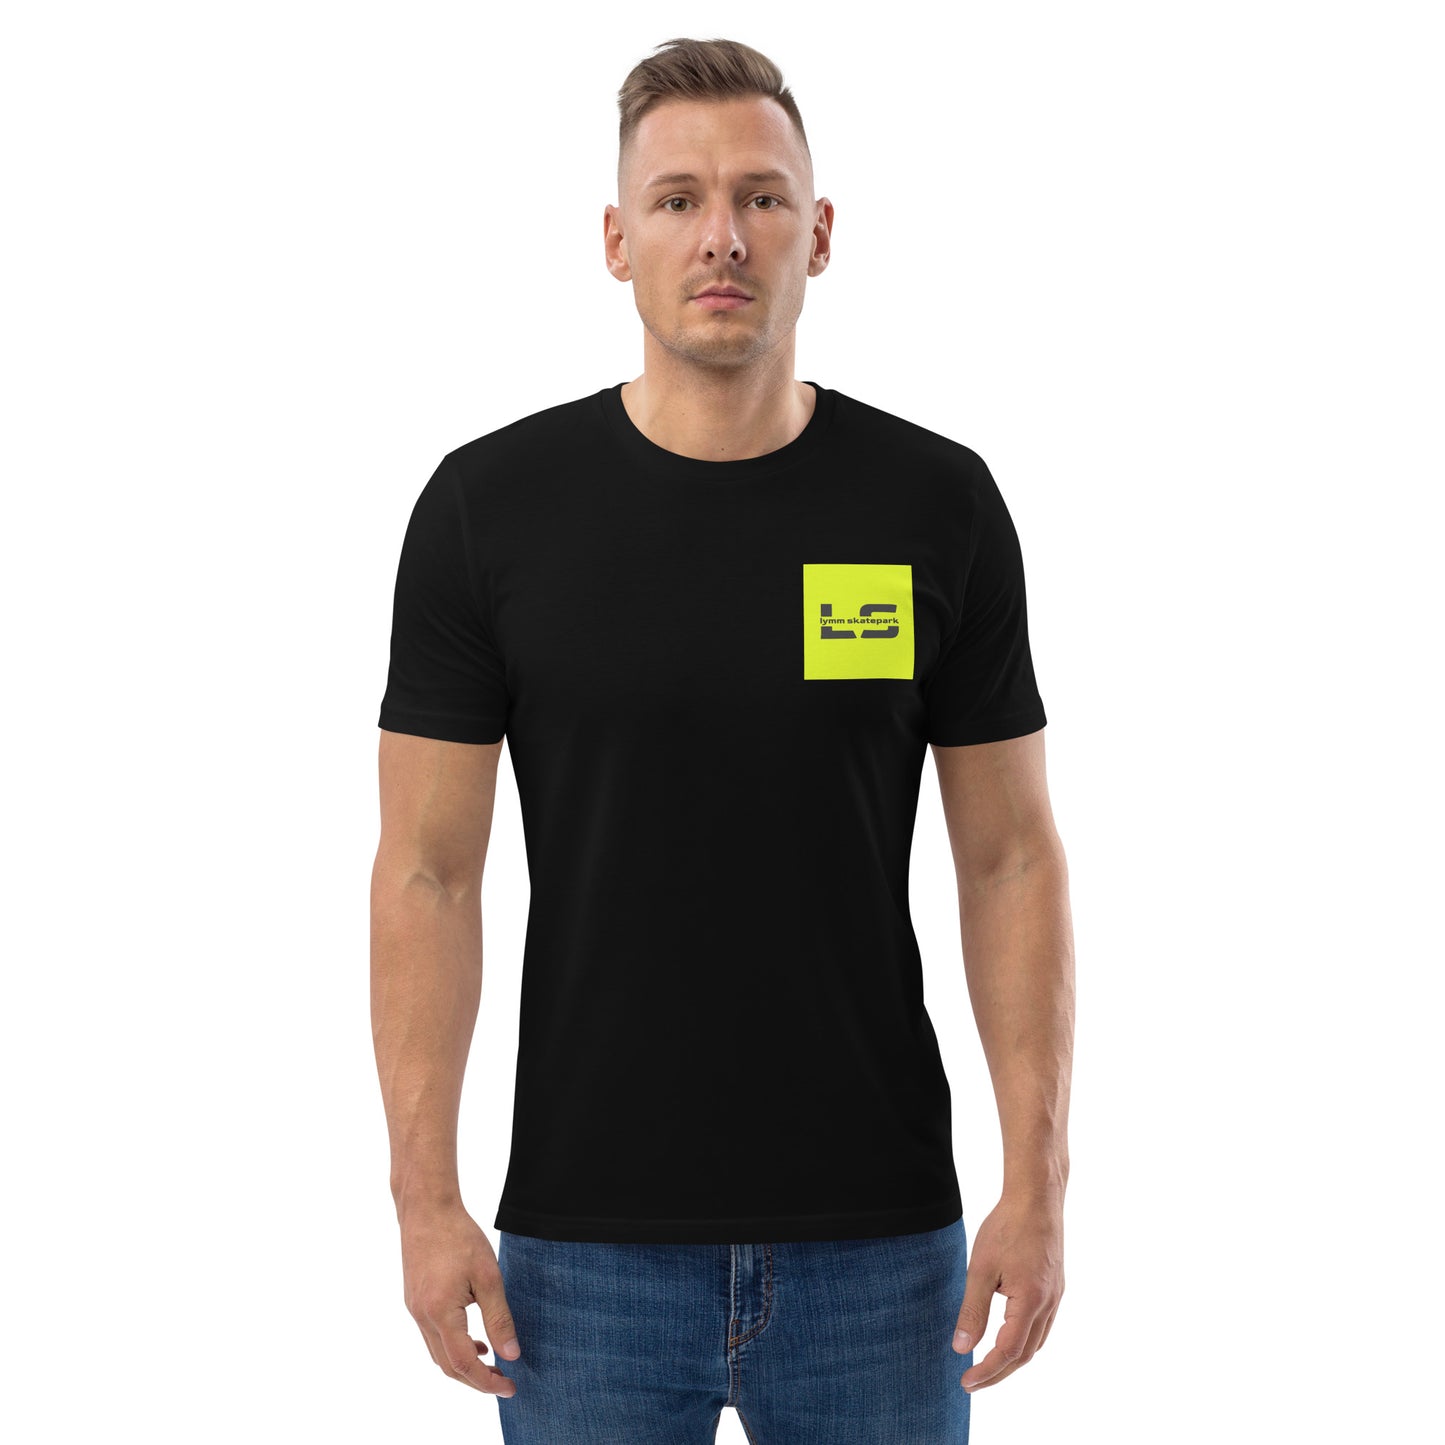 Teens / Adult - Unisex organic cotton t-shirt